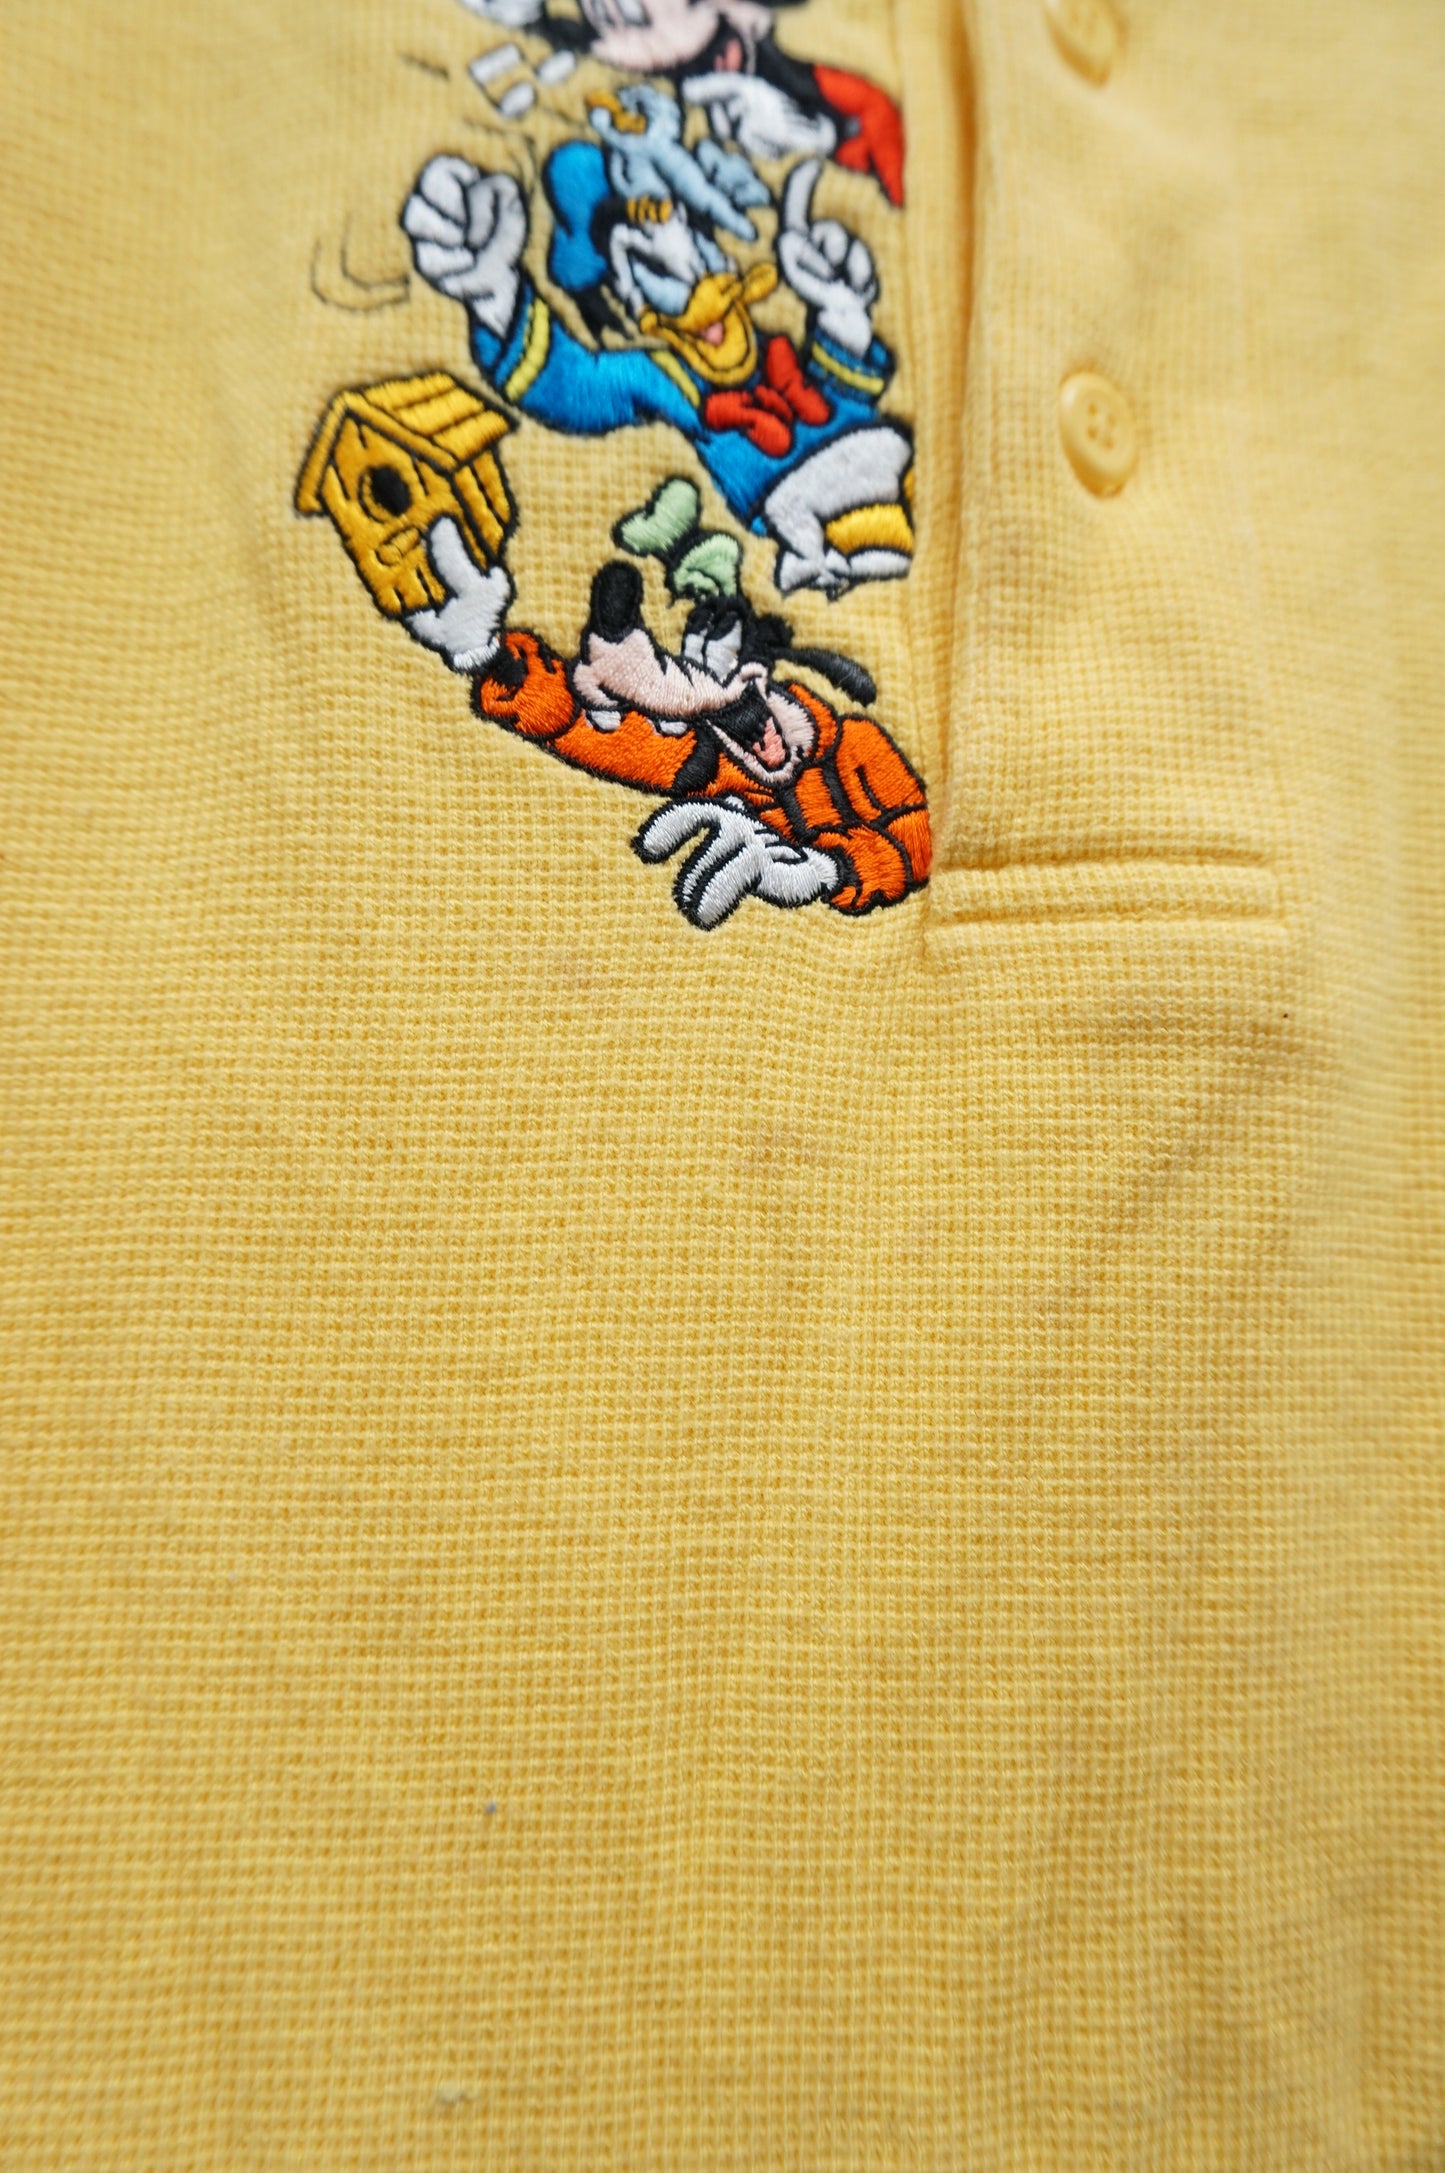 (XL) Vtg Embroidered Disney LS T-Shirt